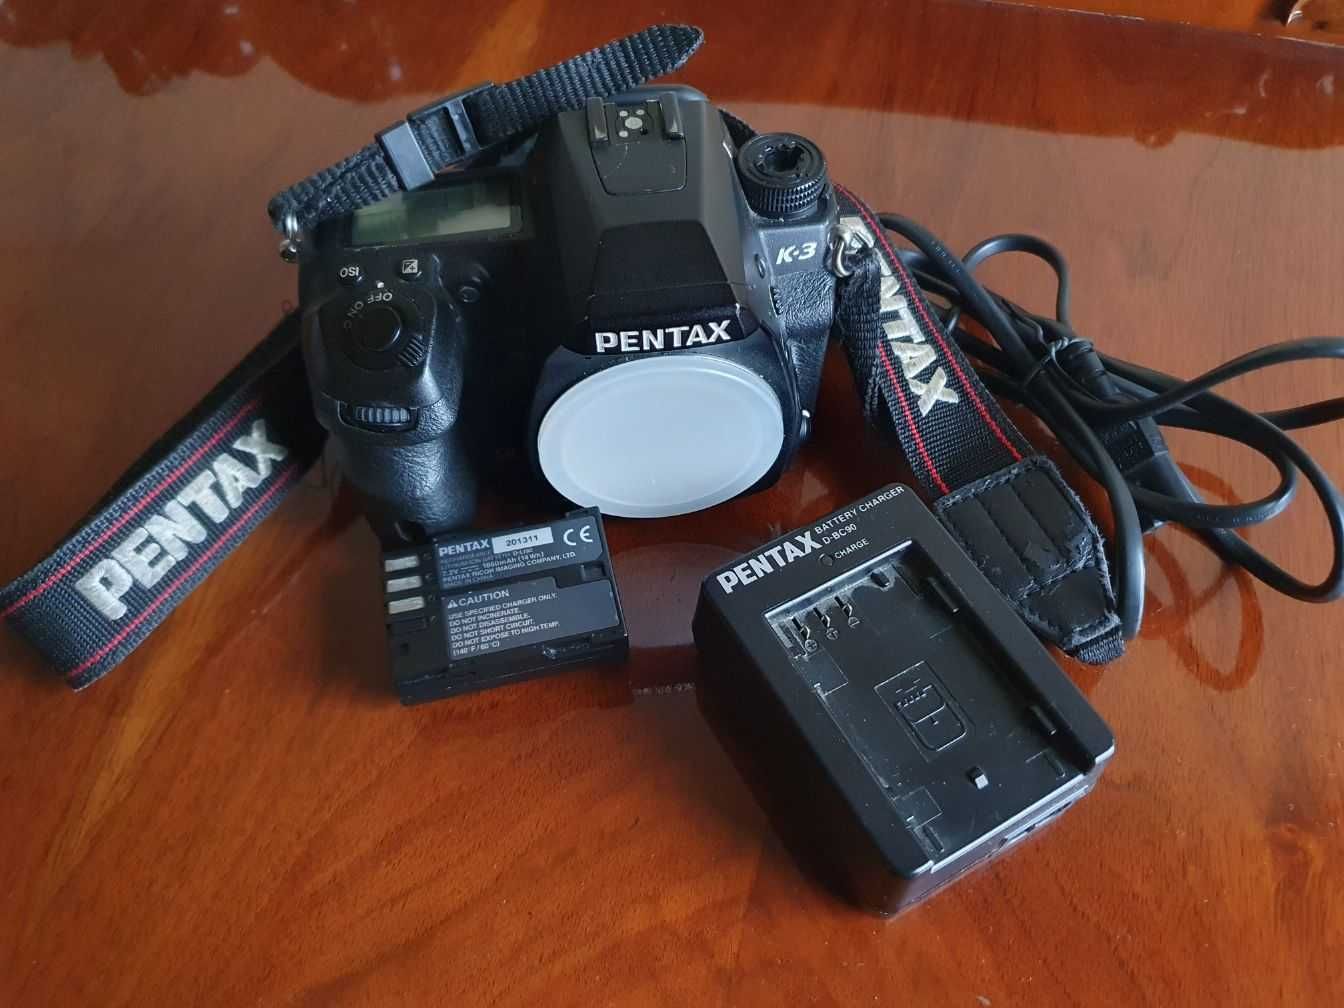 Aparat foto DSLR Pentax K3 ieftin, optional obiective si accesorii